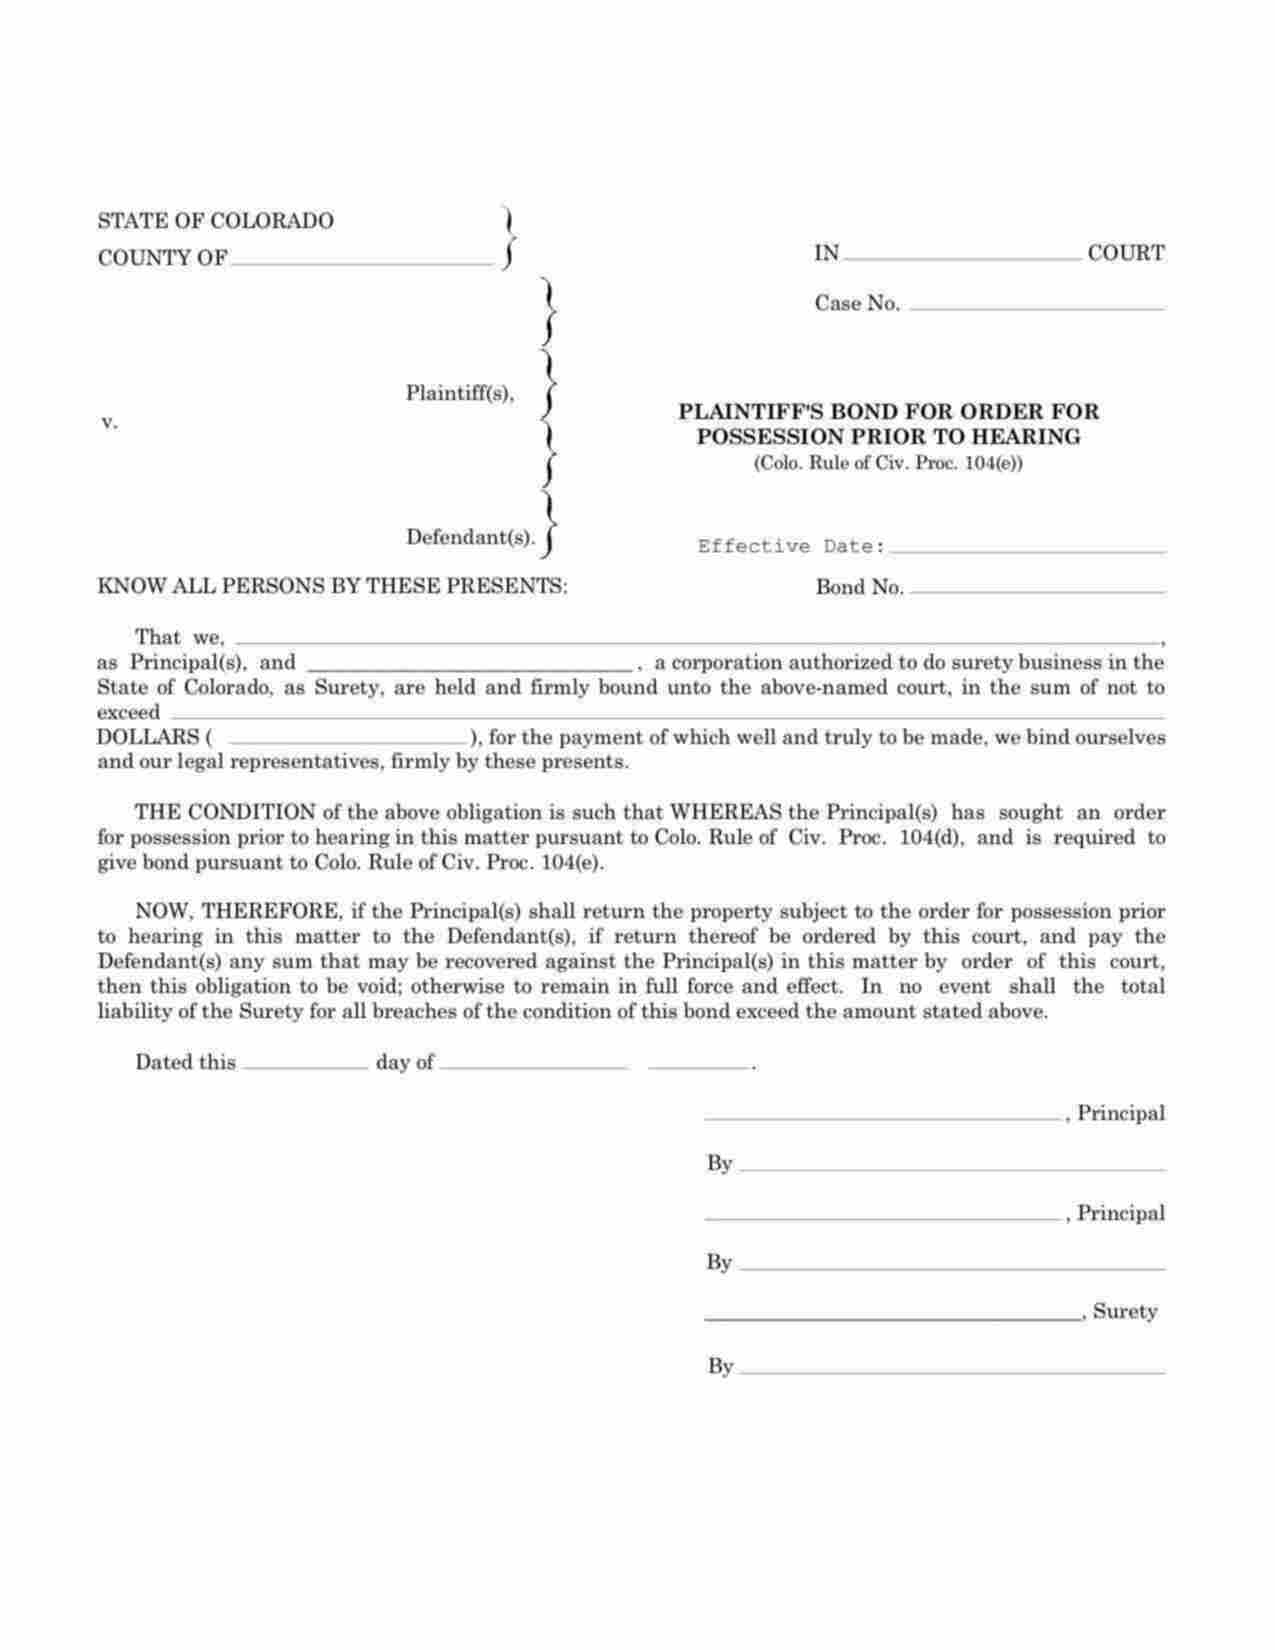 Colorado Plaintiffs Order for Possession Prior to Hearing Bond Form